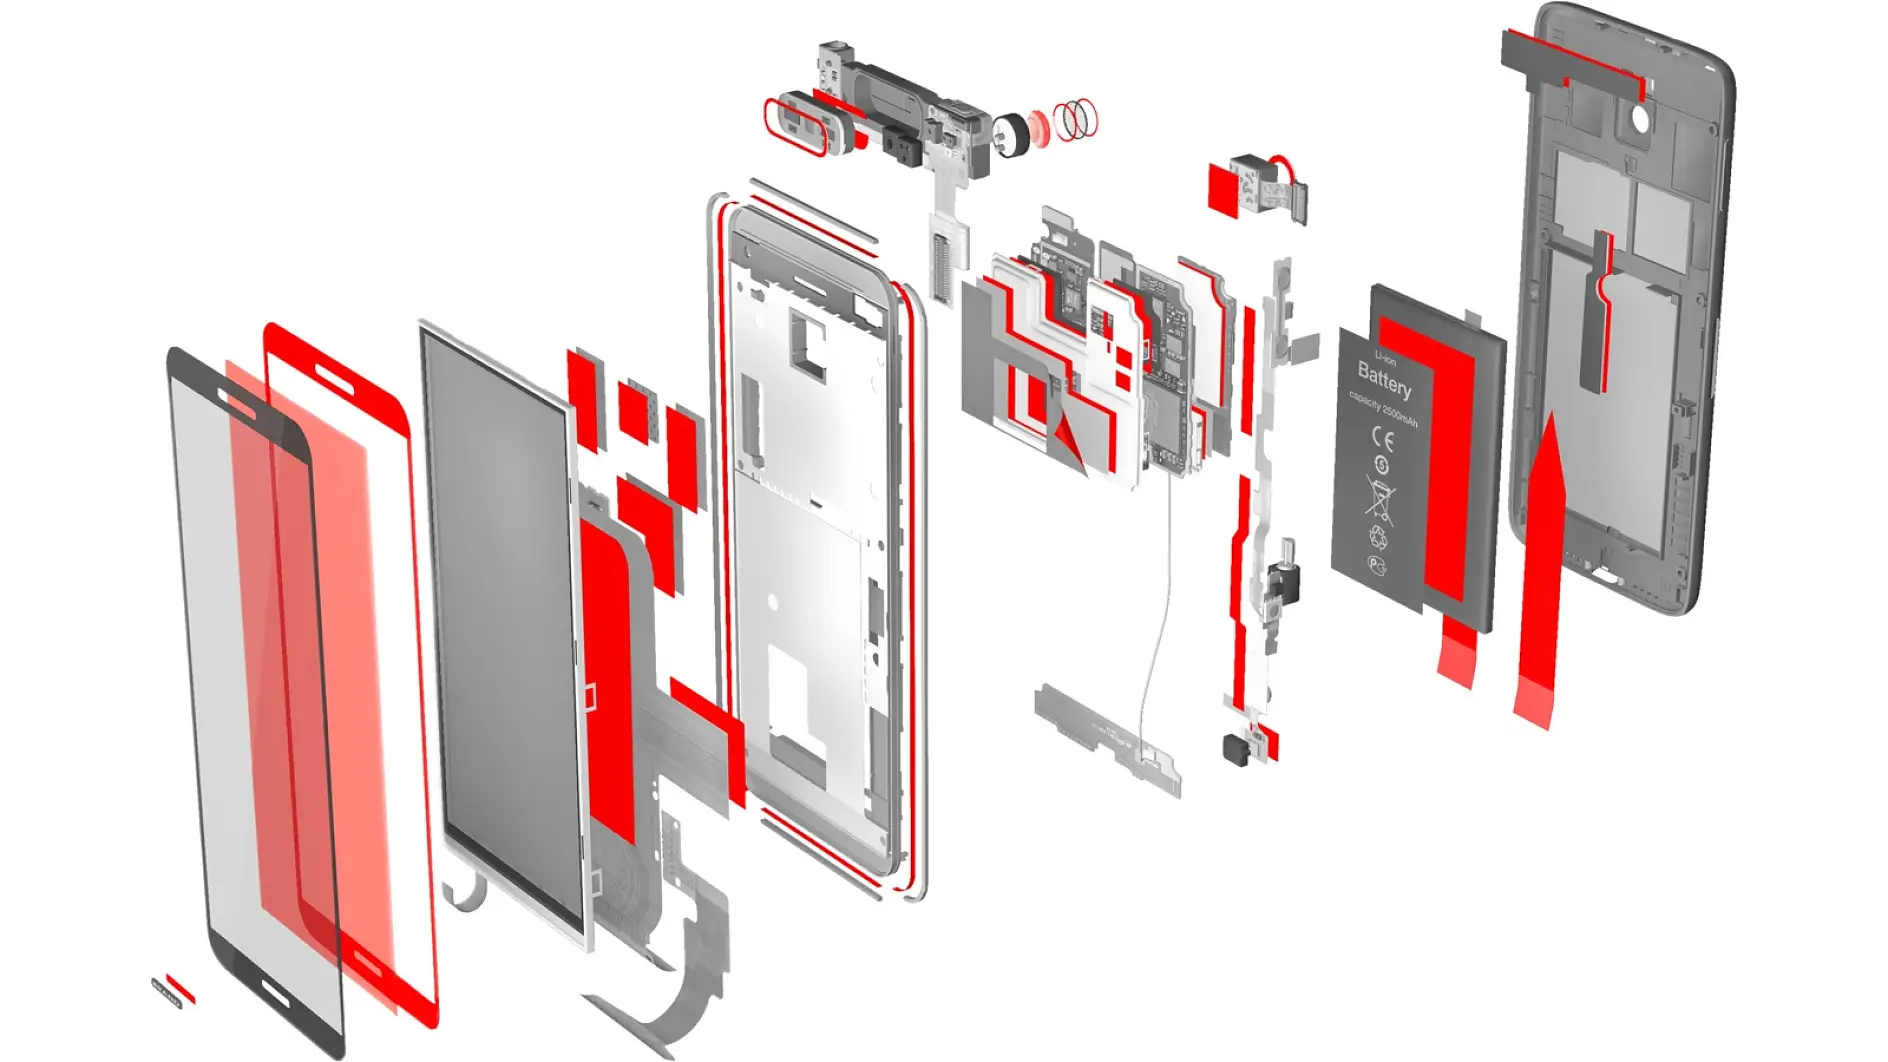 tesa-electronics-smartphone-explosion-001b-illustration-Screen